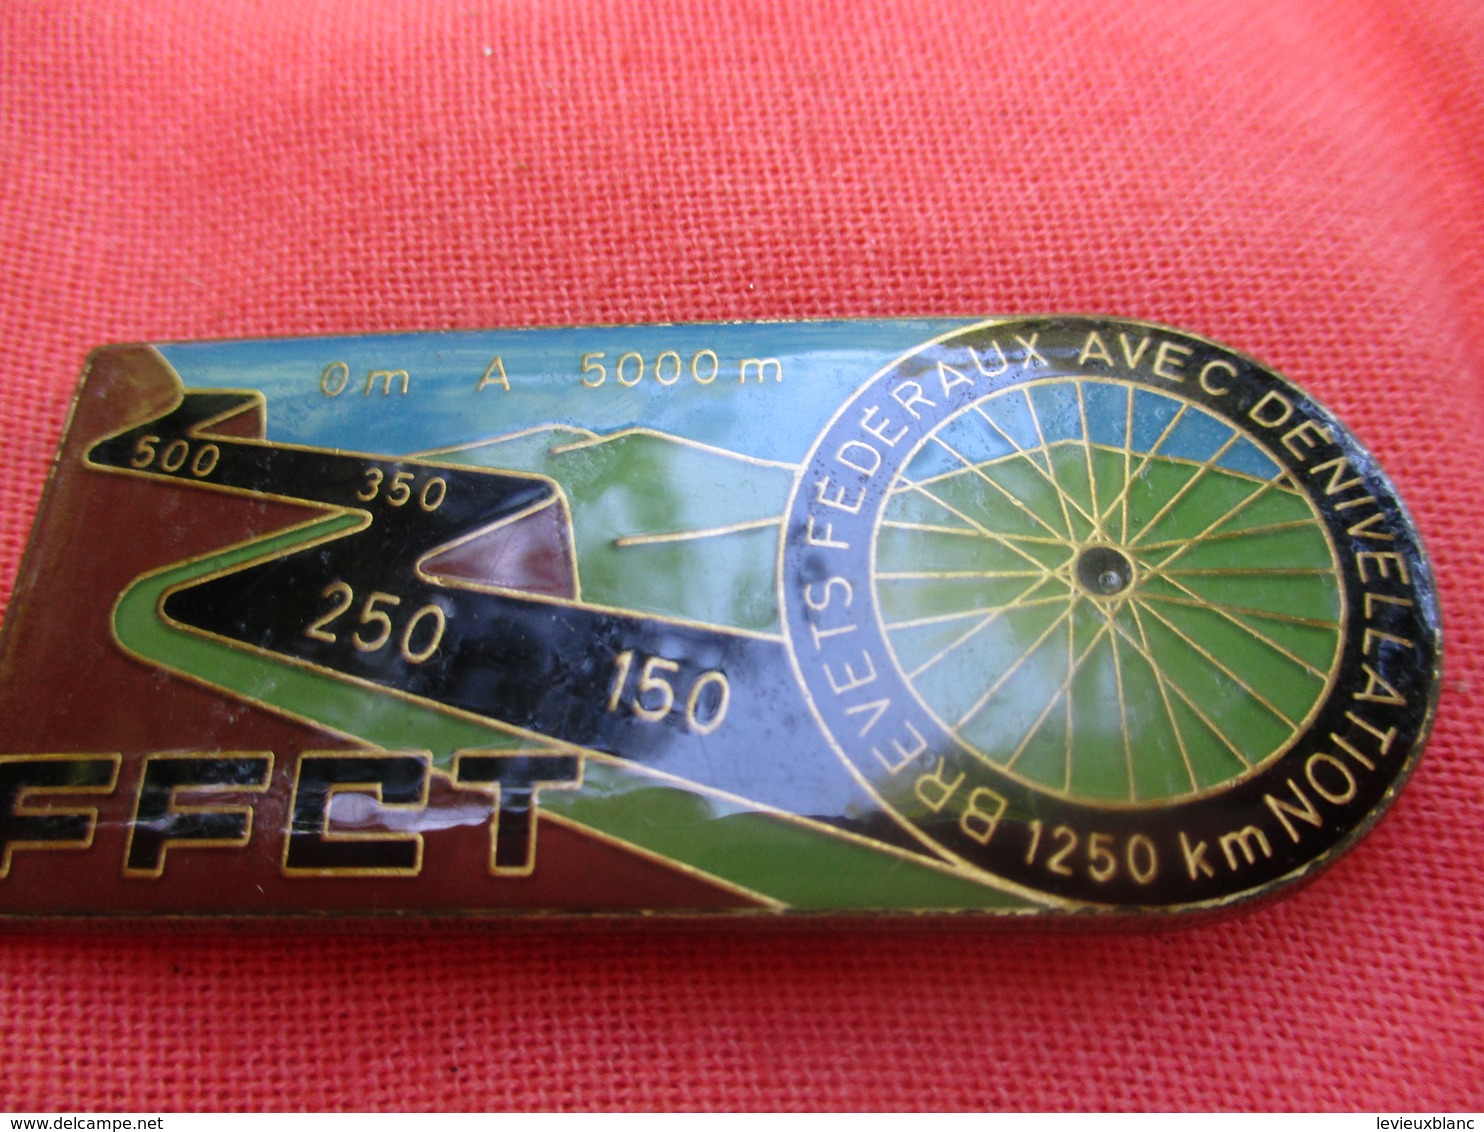 Médaille De Sport/Cyclisme/Brevets Federaux Avec Dénivellation/1250 Km /Beraudy 63 AMBERT/vers 1980-90      SPO298 - Cyclisme